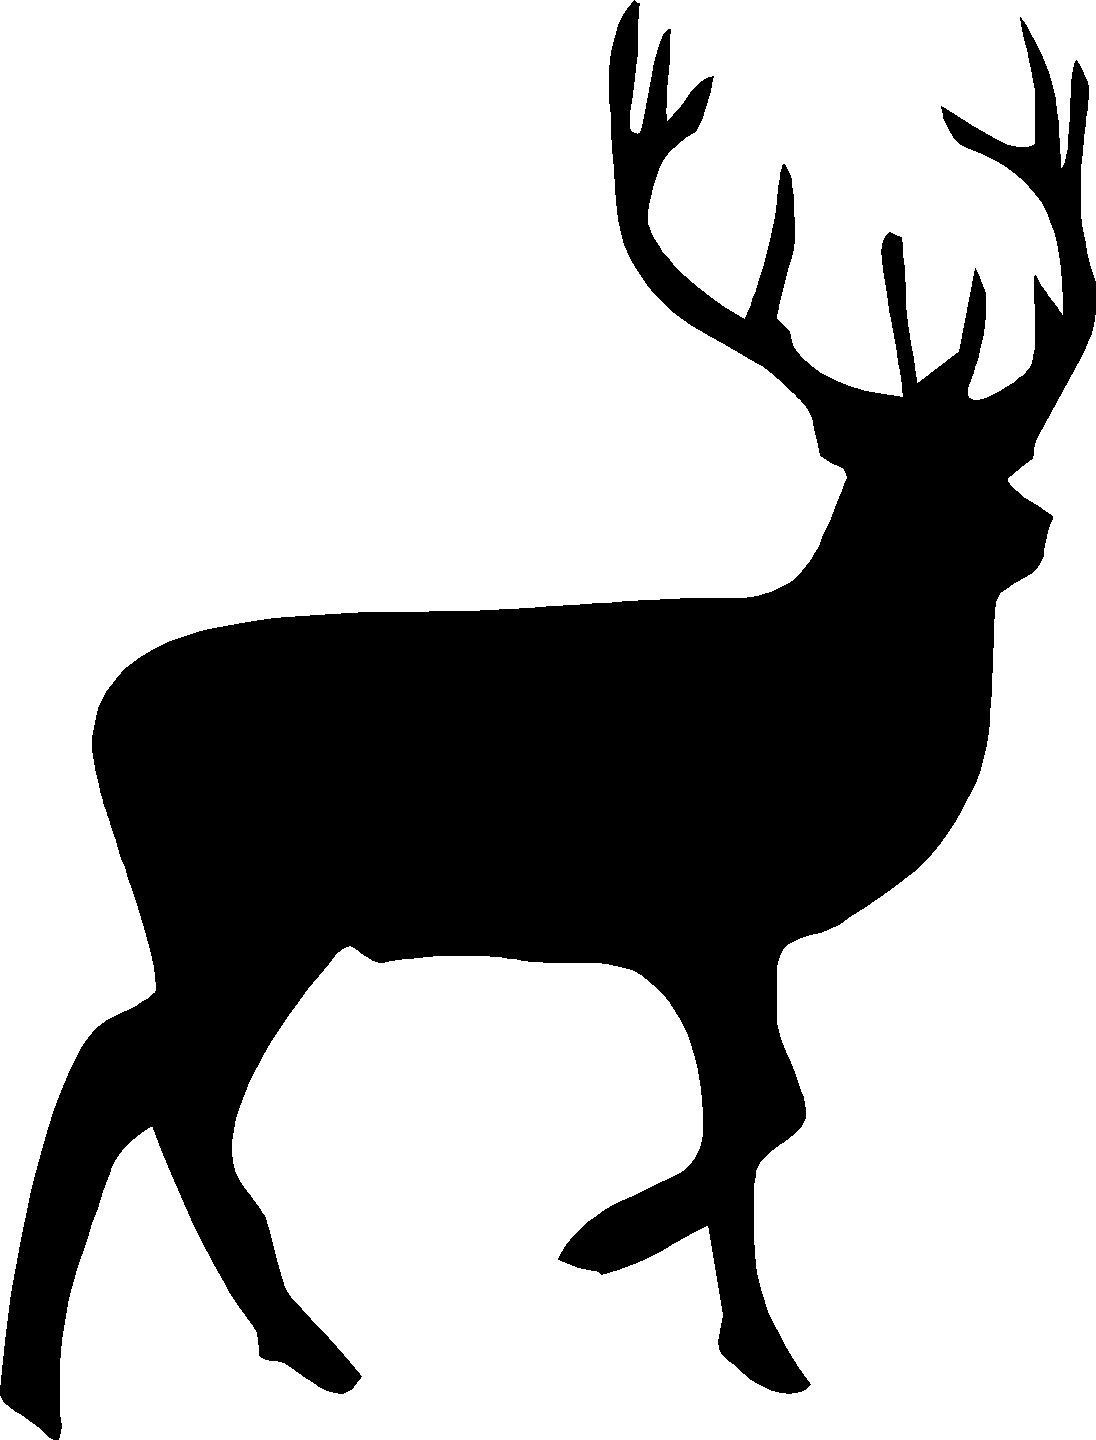 Whitetail deer clip art